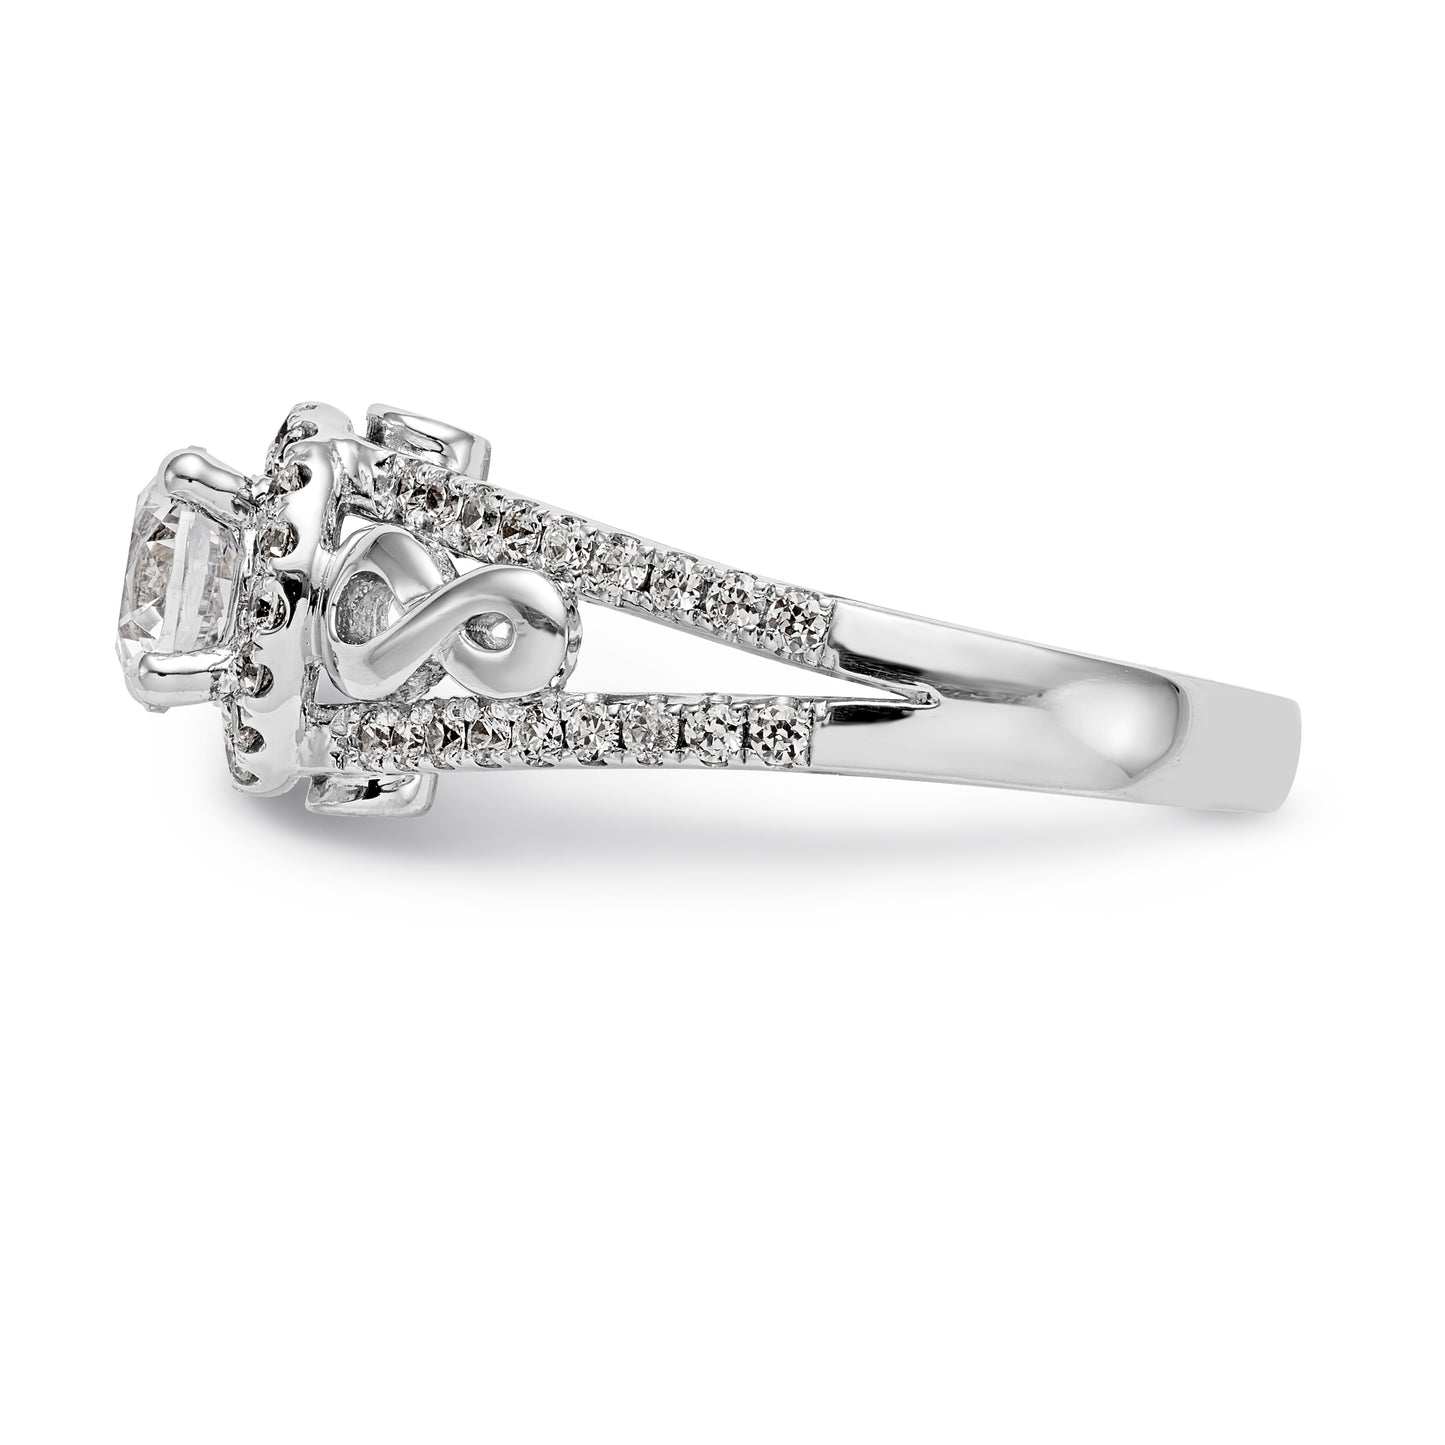 14K White Gold Round Simulated Diamond Halo Engagement Ring